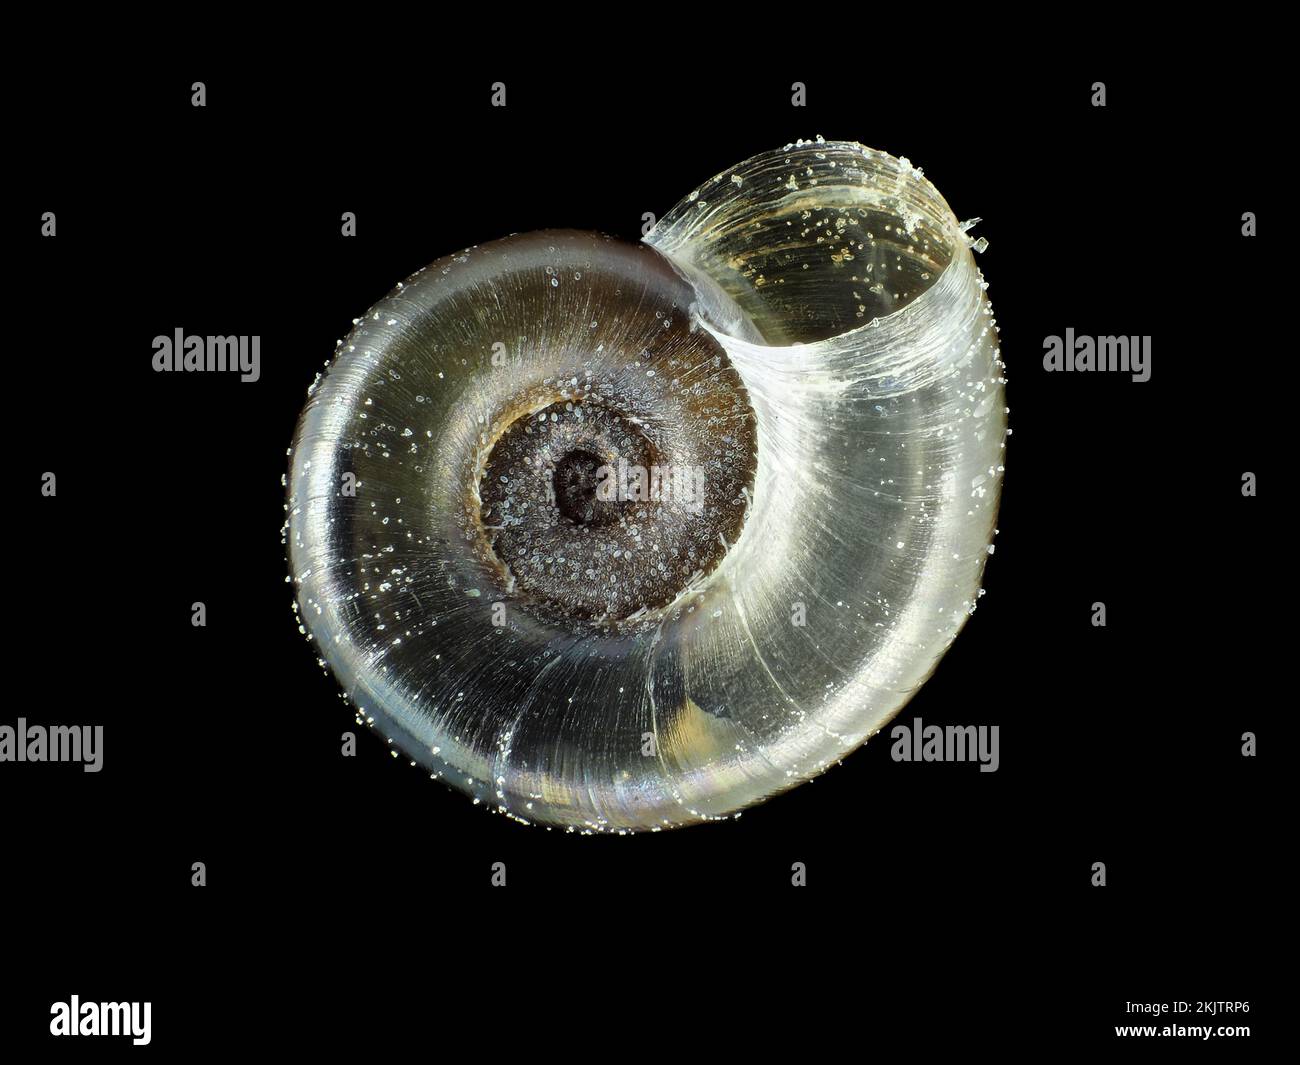 Tiny fungivore snail shell under the microscope Stock Photo